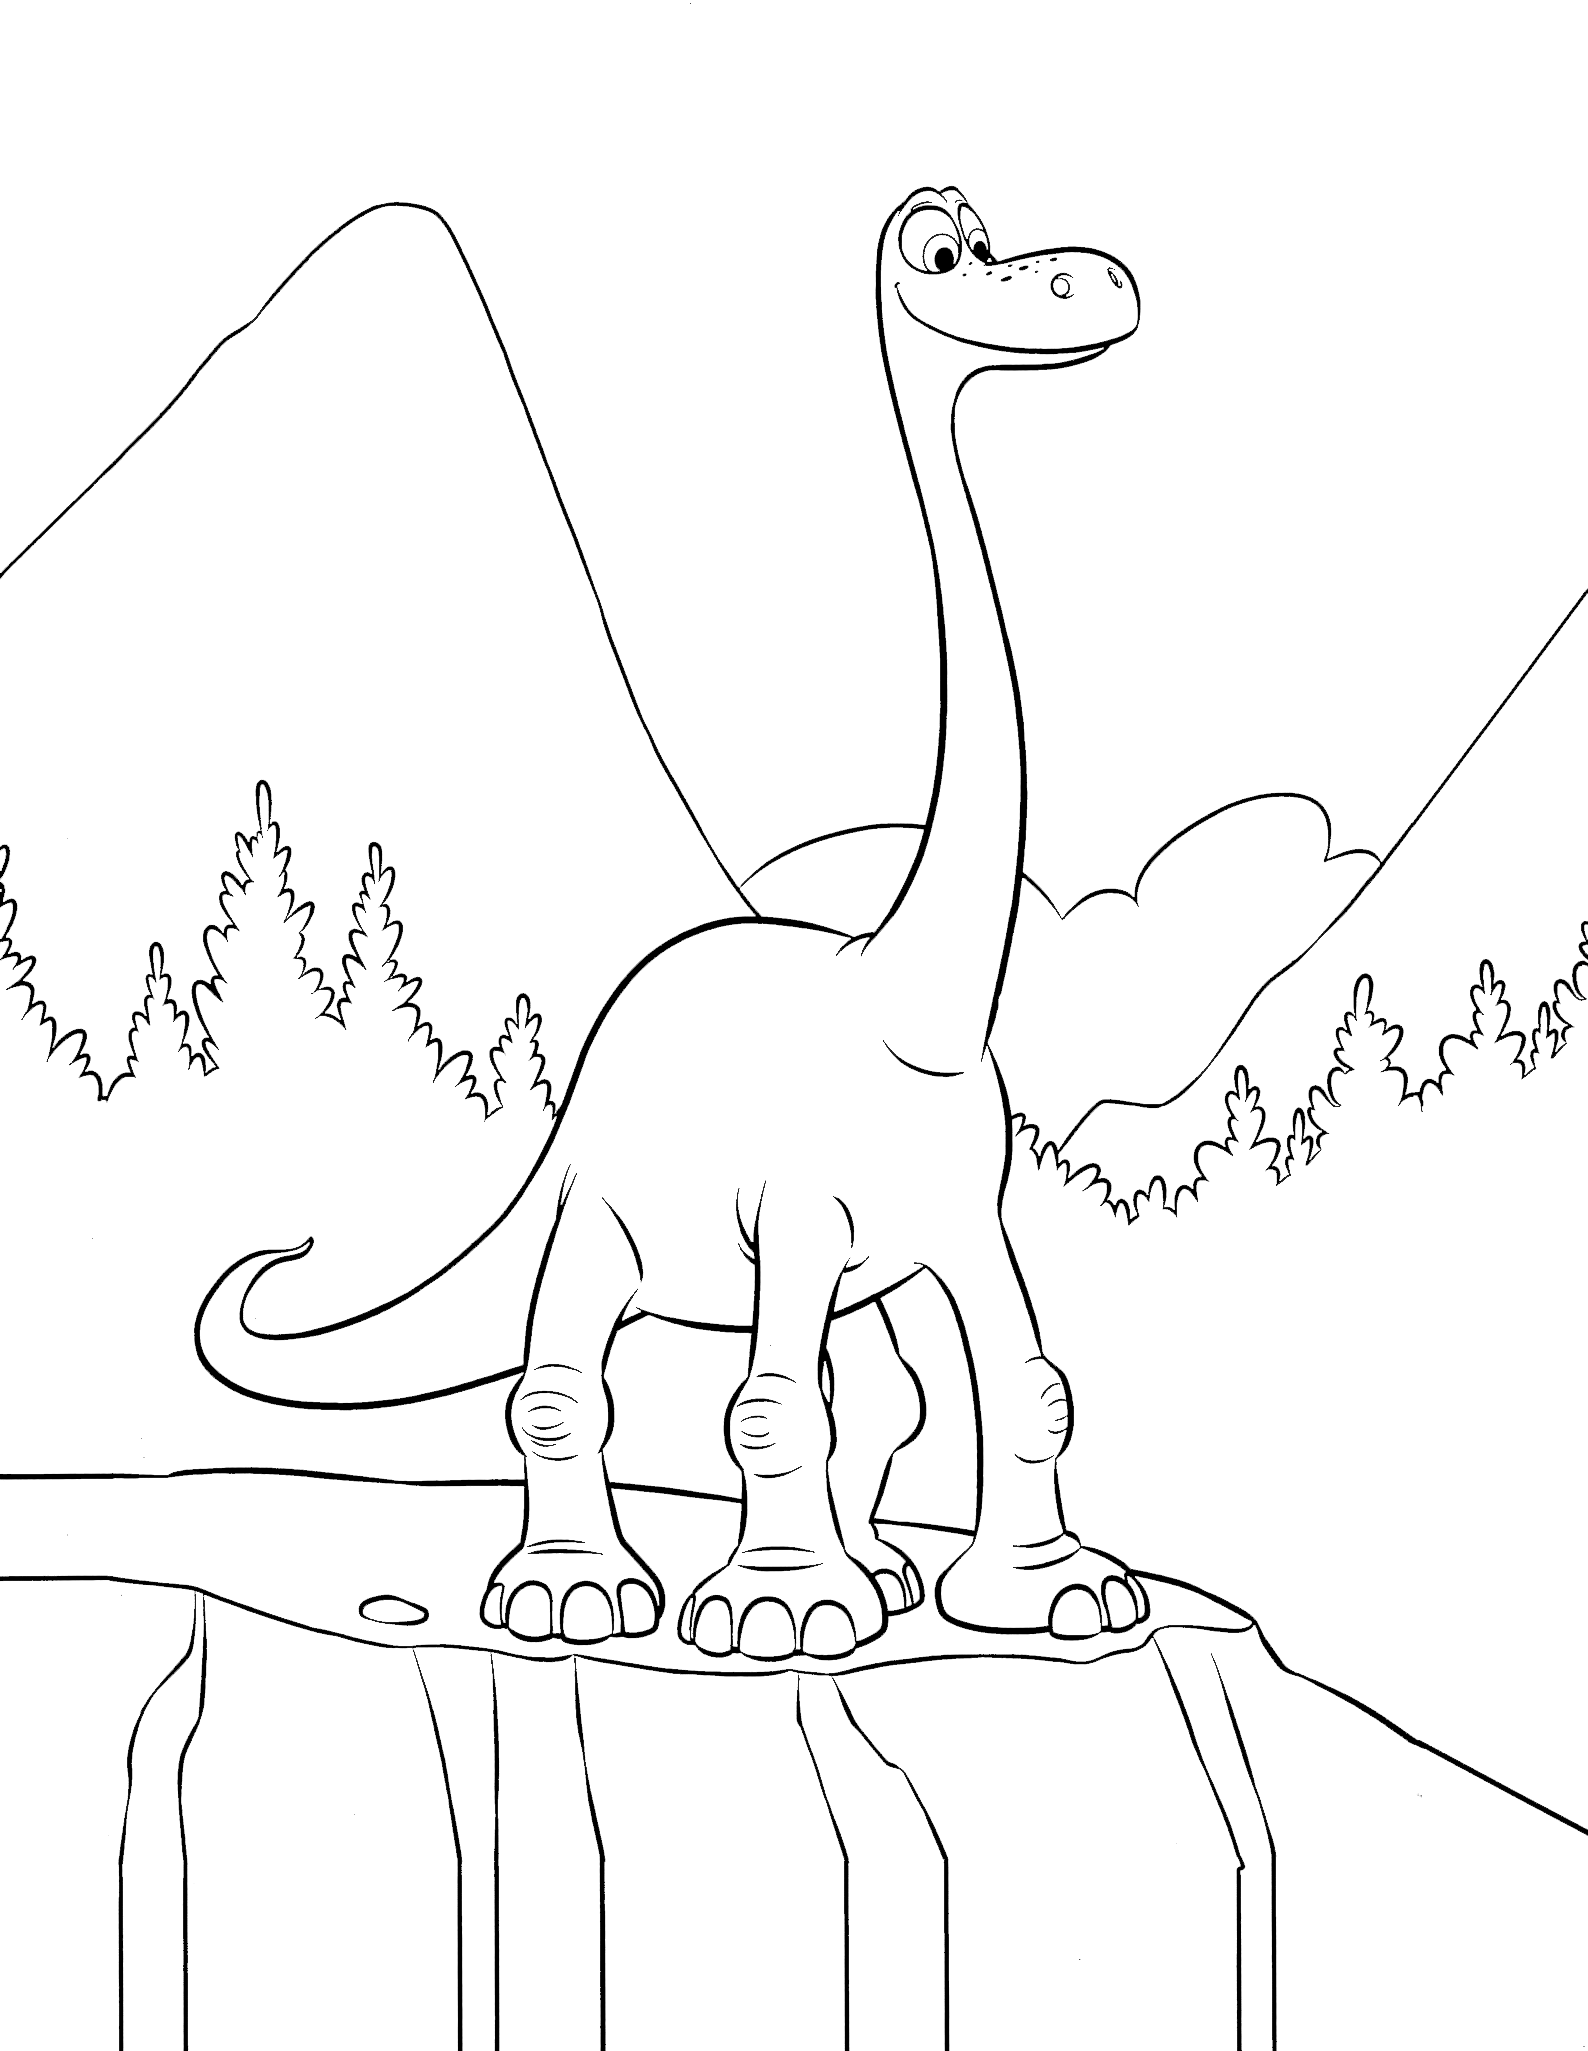 The Good Dinosaur - Arlo looks beyond the cliff